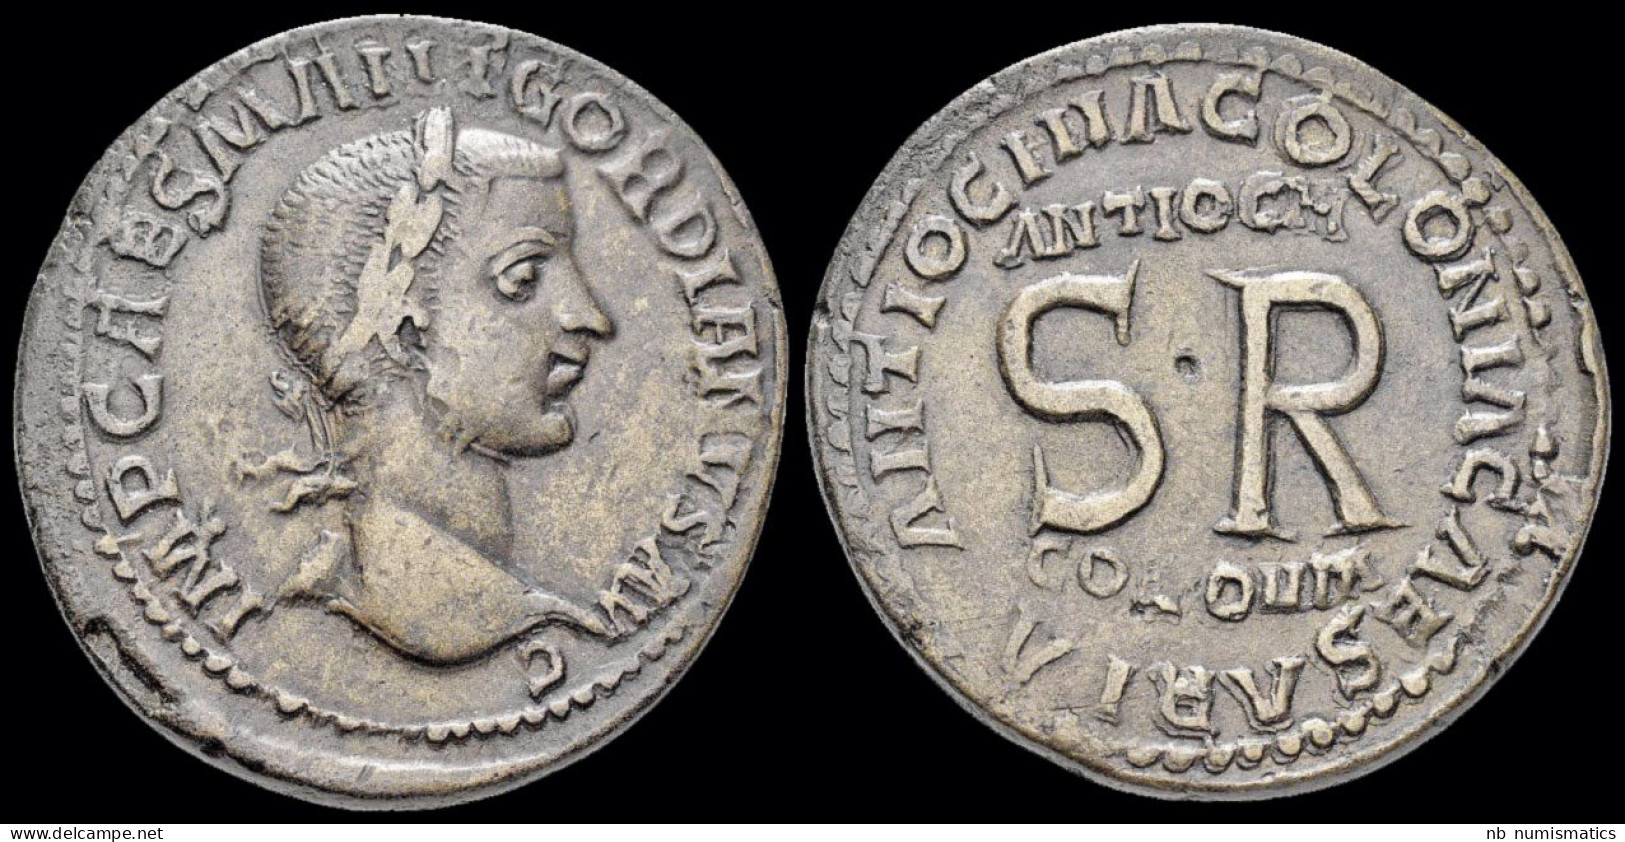 Pisidia Antiochia Gordian III AE Medallion Large S  R - Röm. Provinz